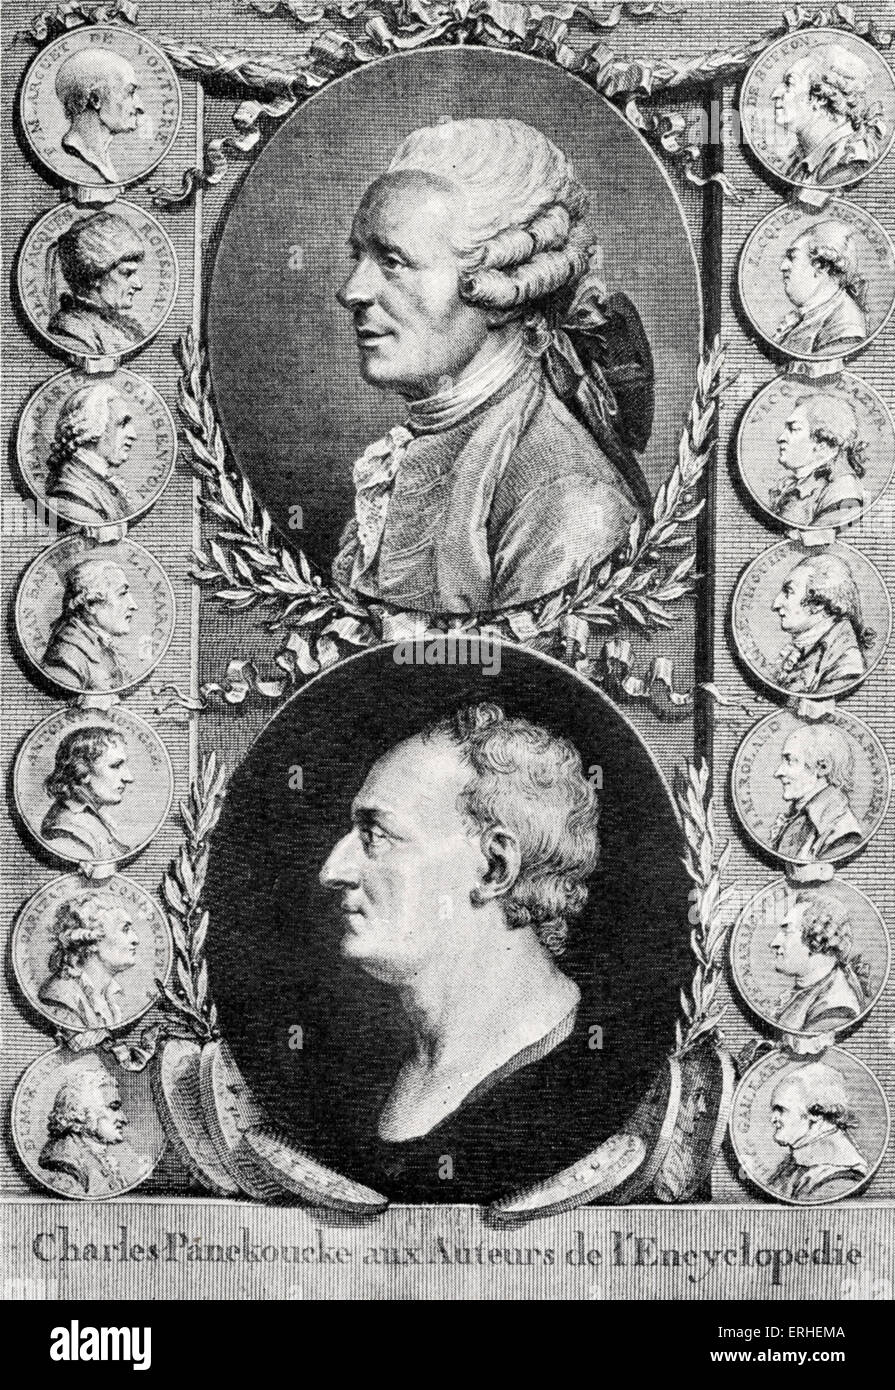 Authors of Diderot's Encylopedia grouped around Alembert and Diderot. Voltaire, Rousseau, Daubenton, Lamarck, Monge, Condorcet, Stock Photo